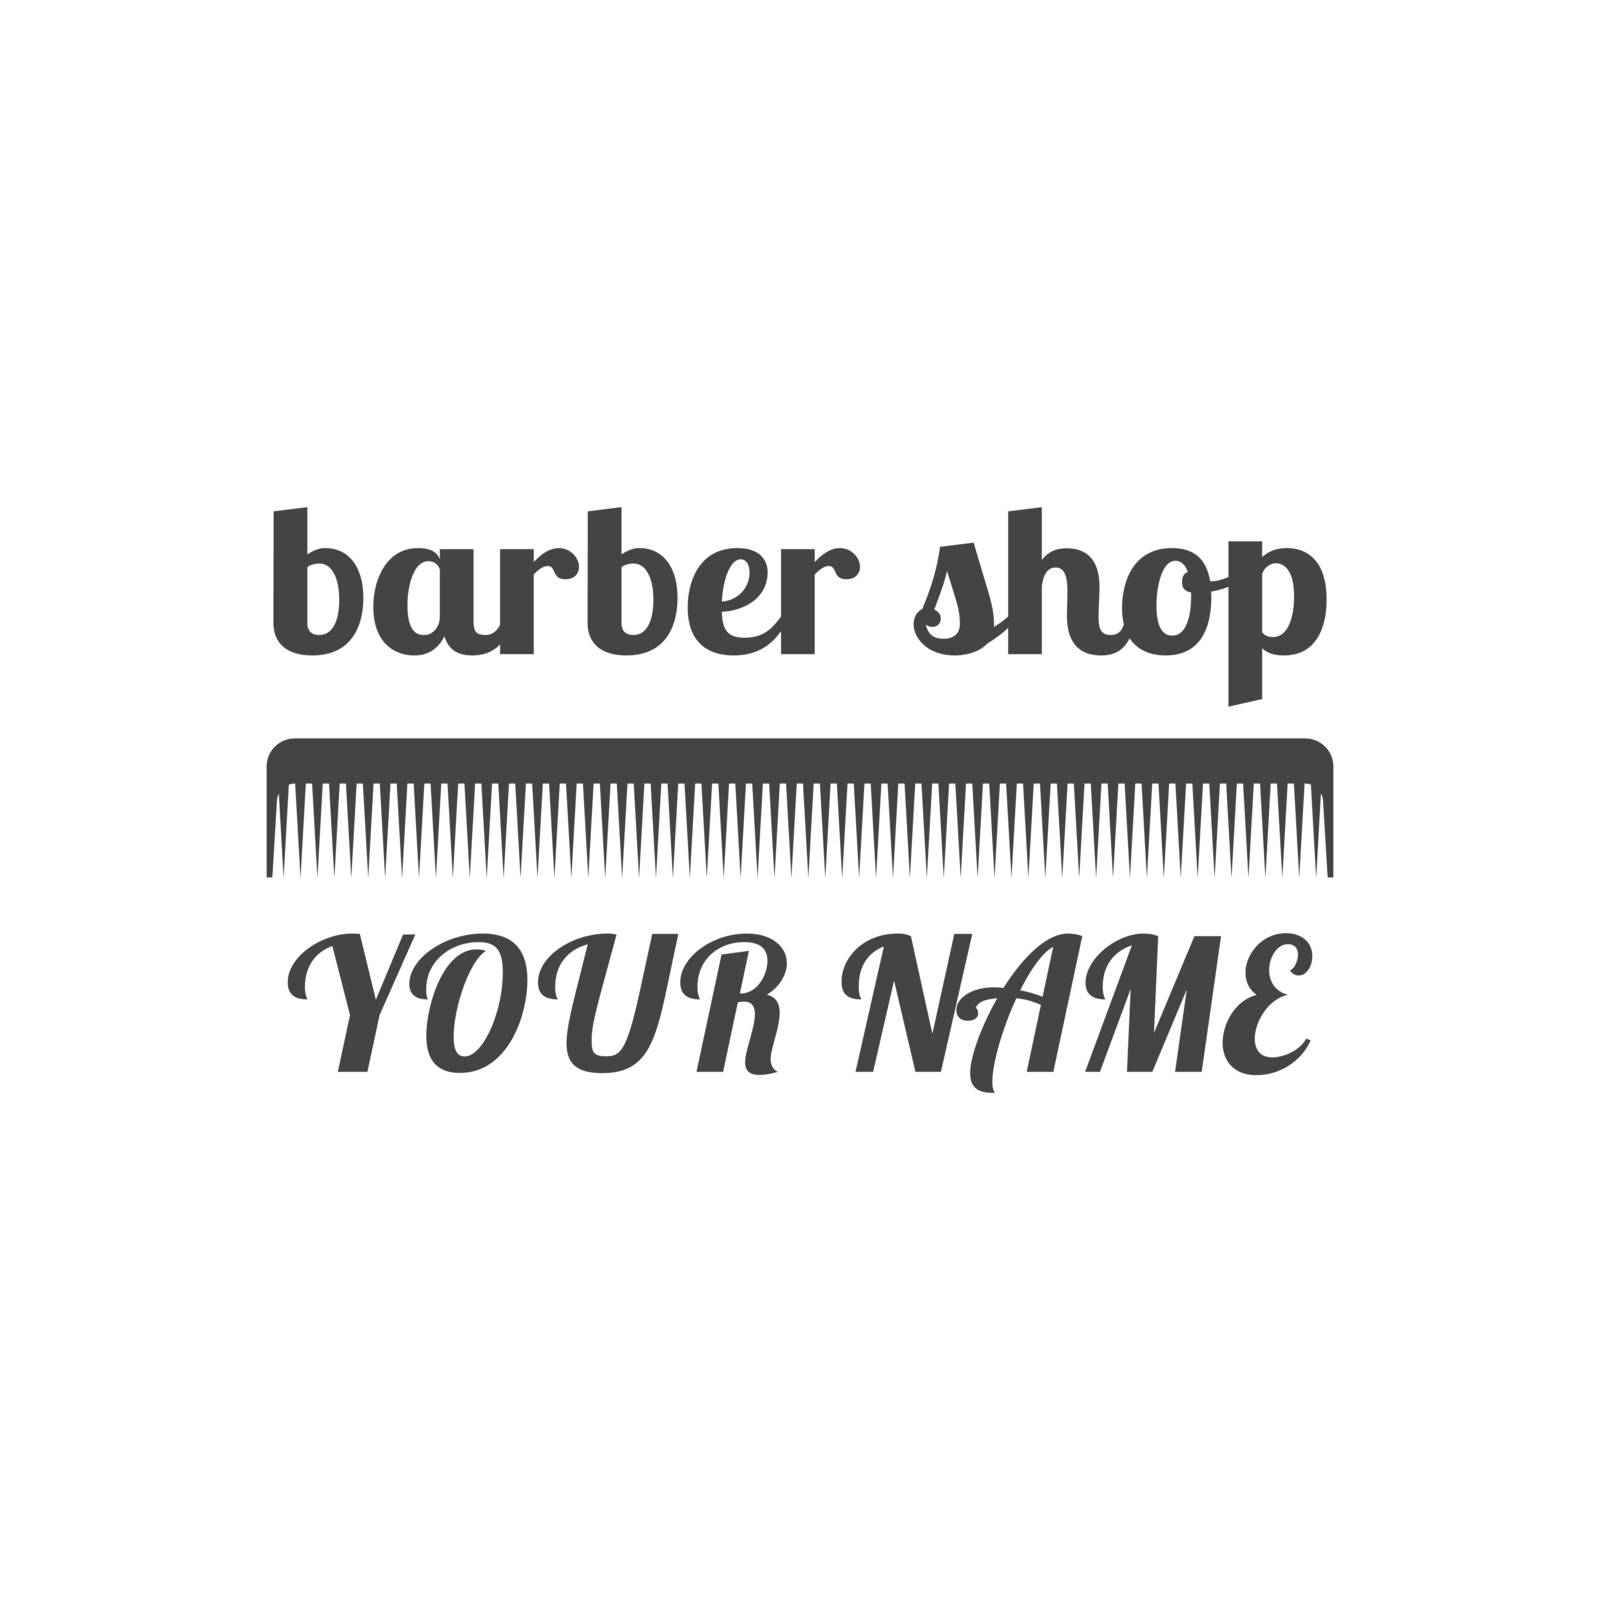 Grey emblem, logo, label for a barber shop, isolated on a white background. Vintage flat style, vector illustration.